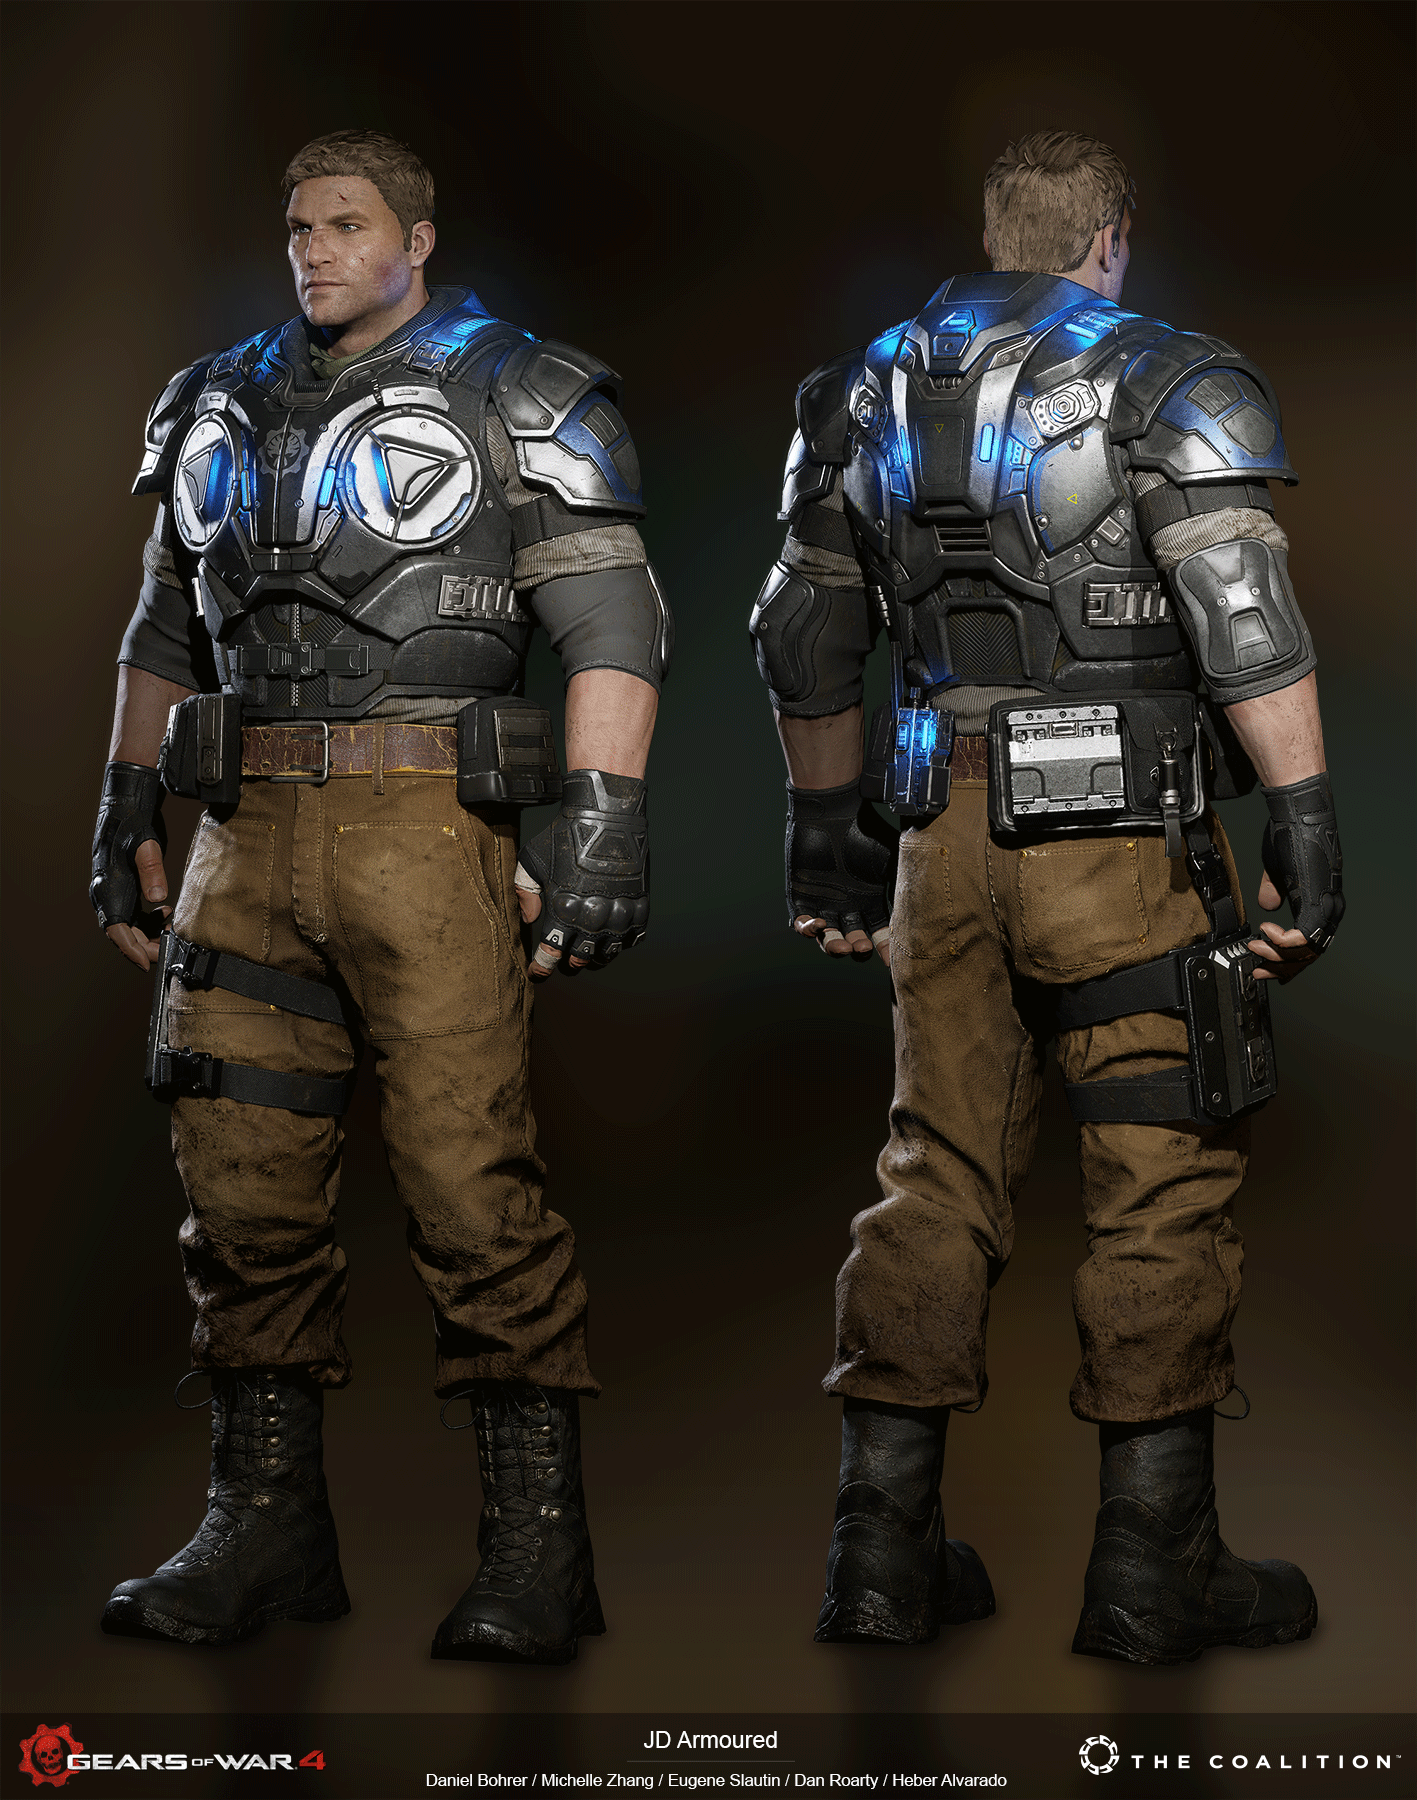 Gears Of War 4 Preview - Character Breakdown: Meet The New Gears